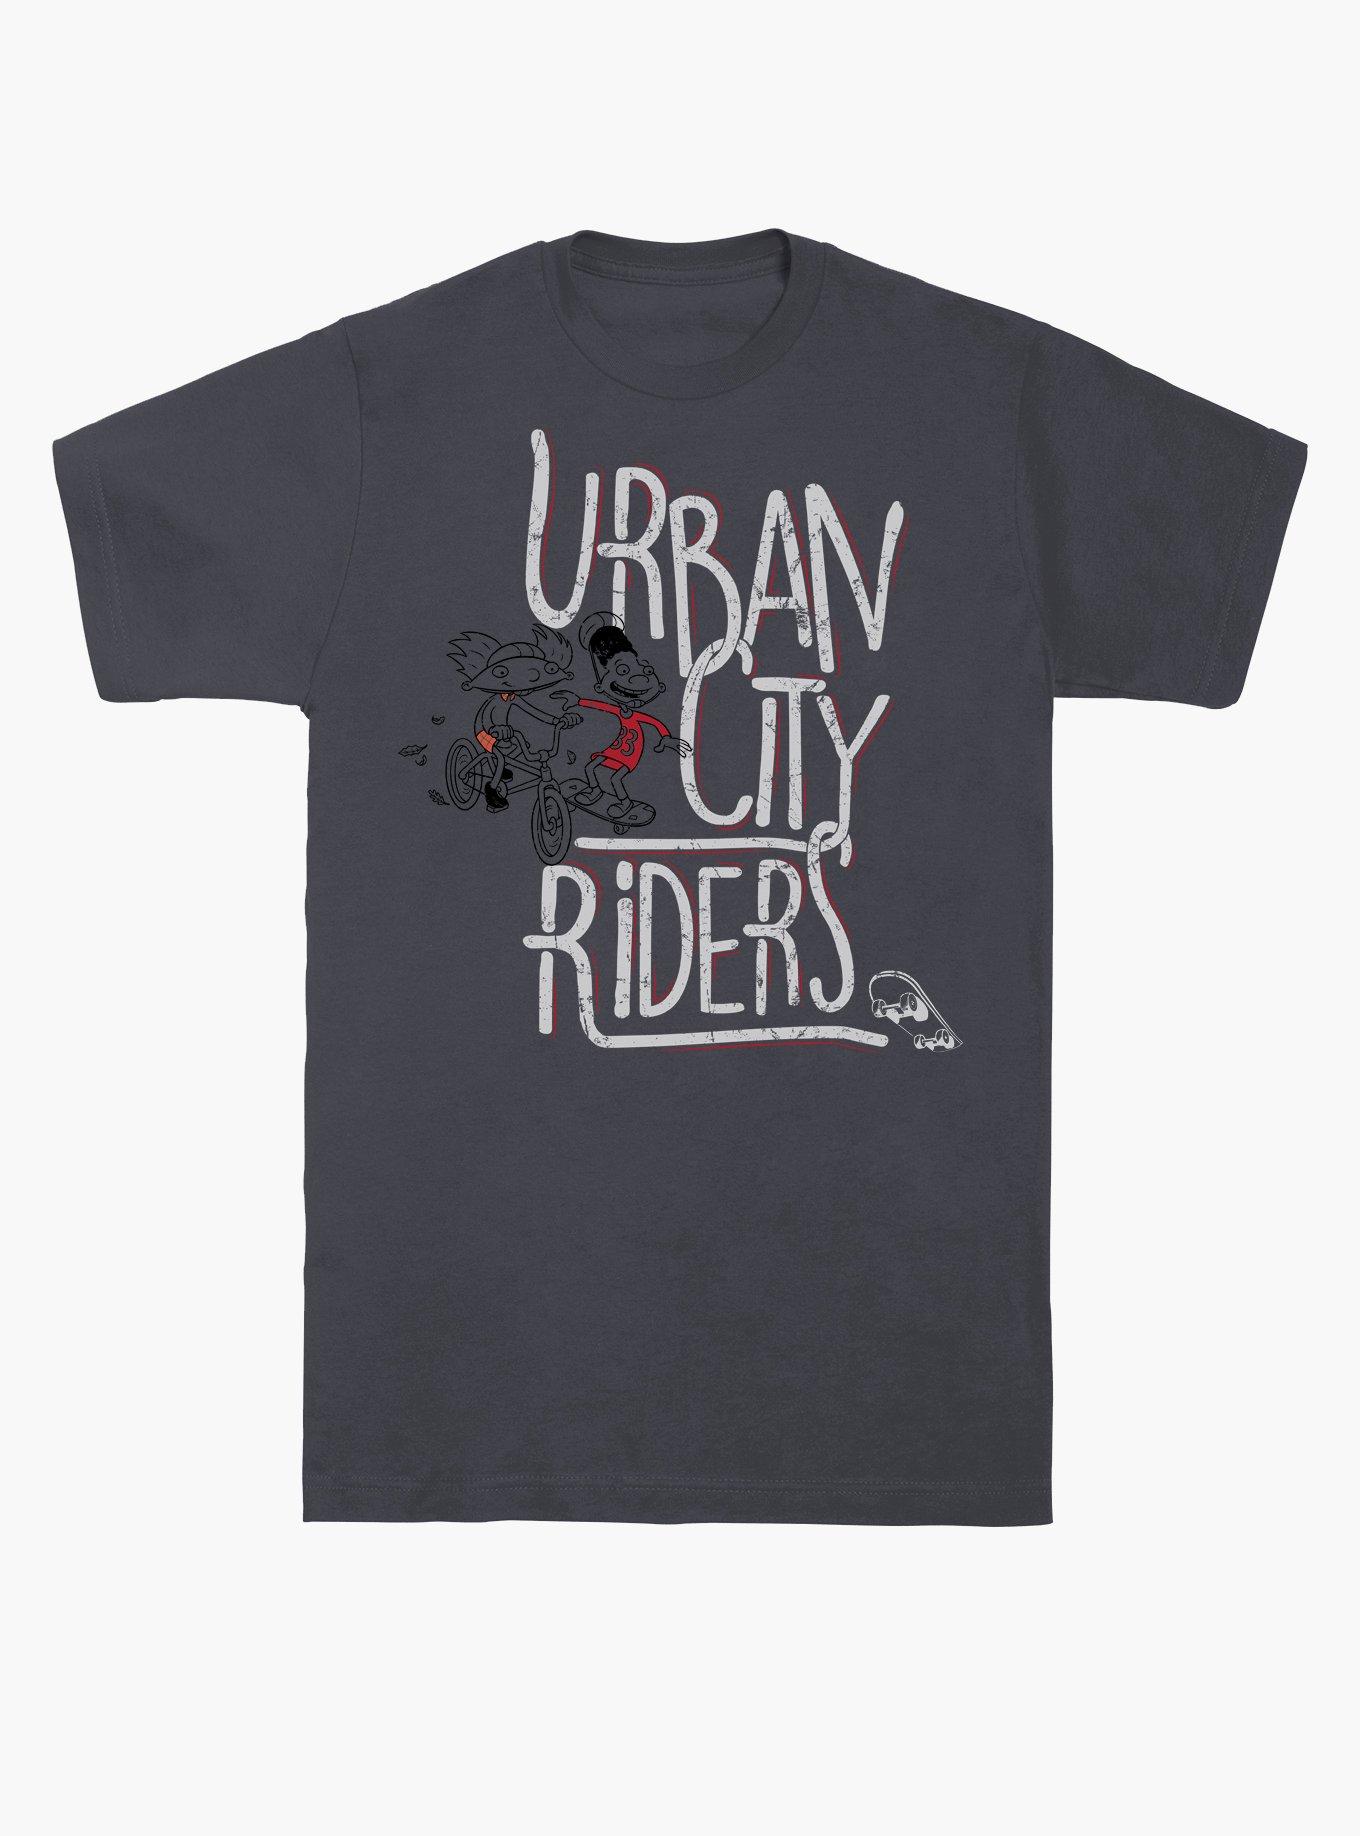 Hey Arnold! Urban City T-Shirt